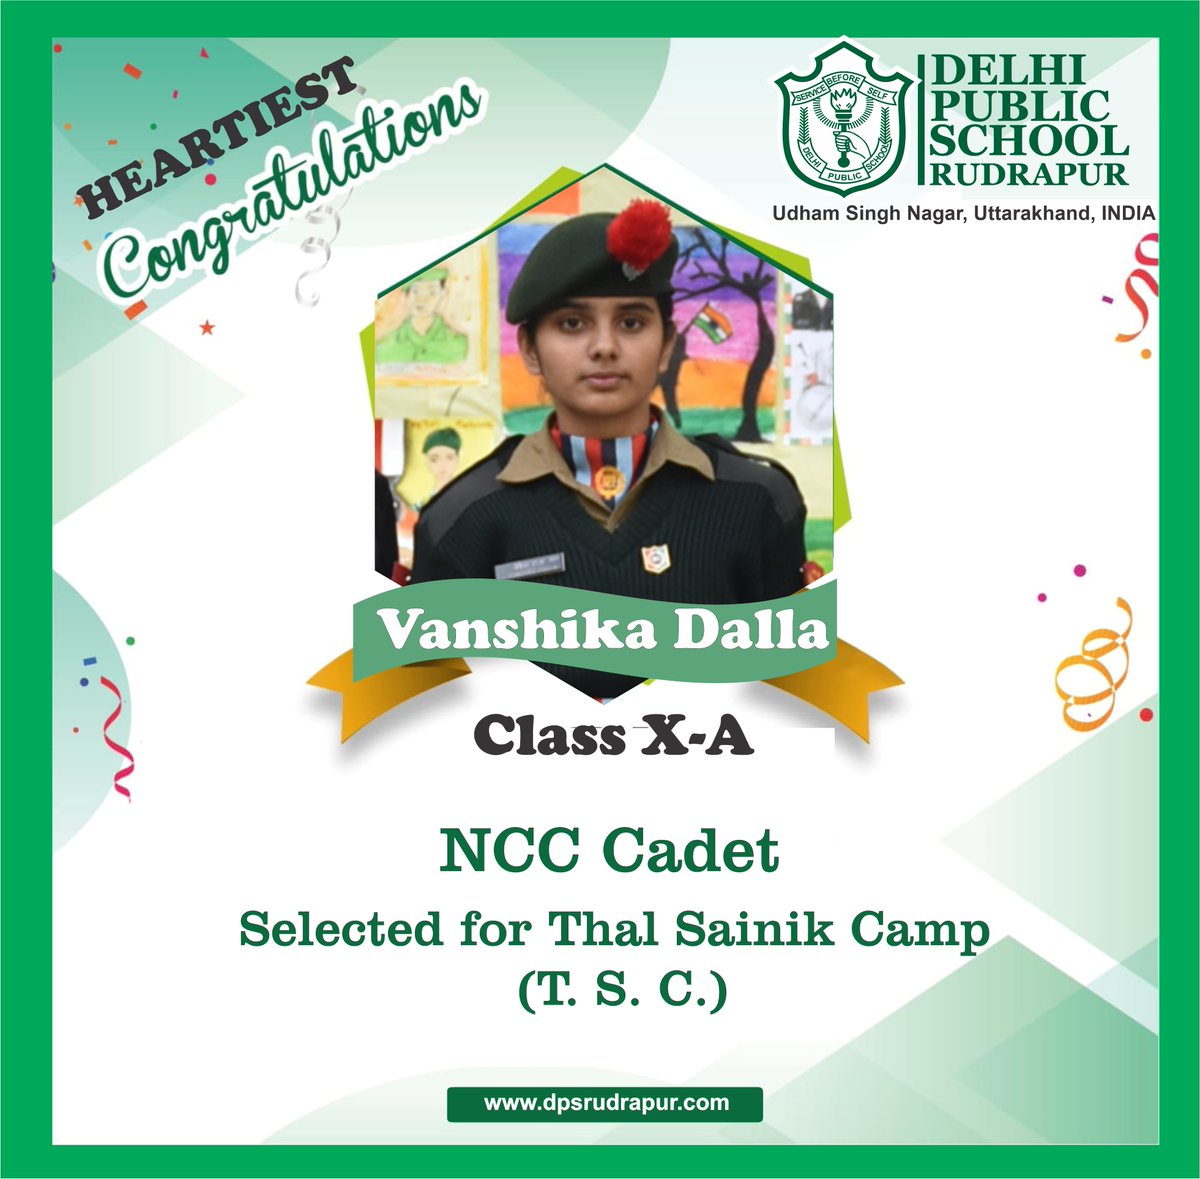 Heartiest Congratulations || Vanshika Dalla_Class X-A || Selected for Thal Sainik Camp

#dpsrudrapur #delhipublicschoolrudrapur #bestschoolintown #bestacademics #ncc